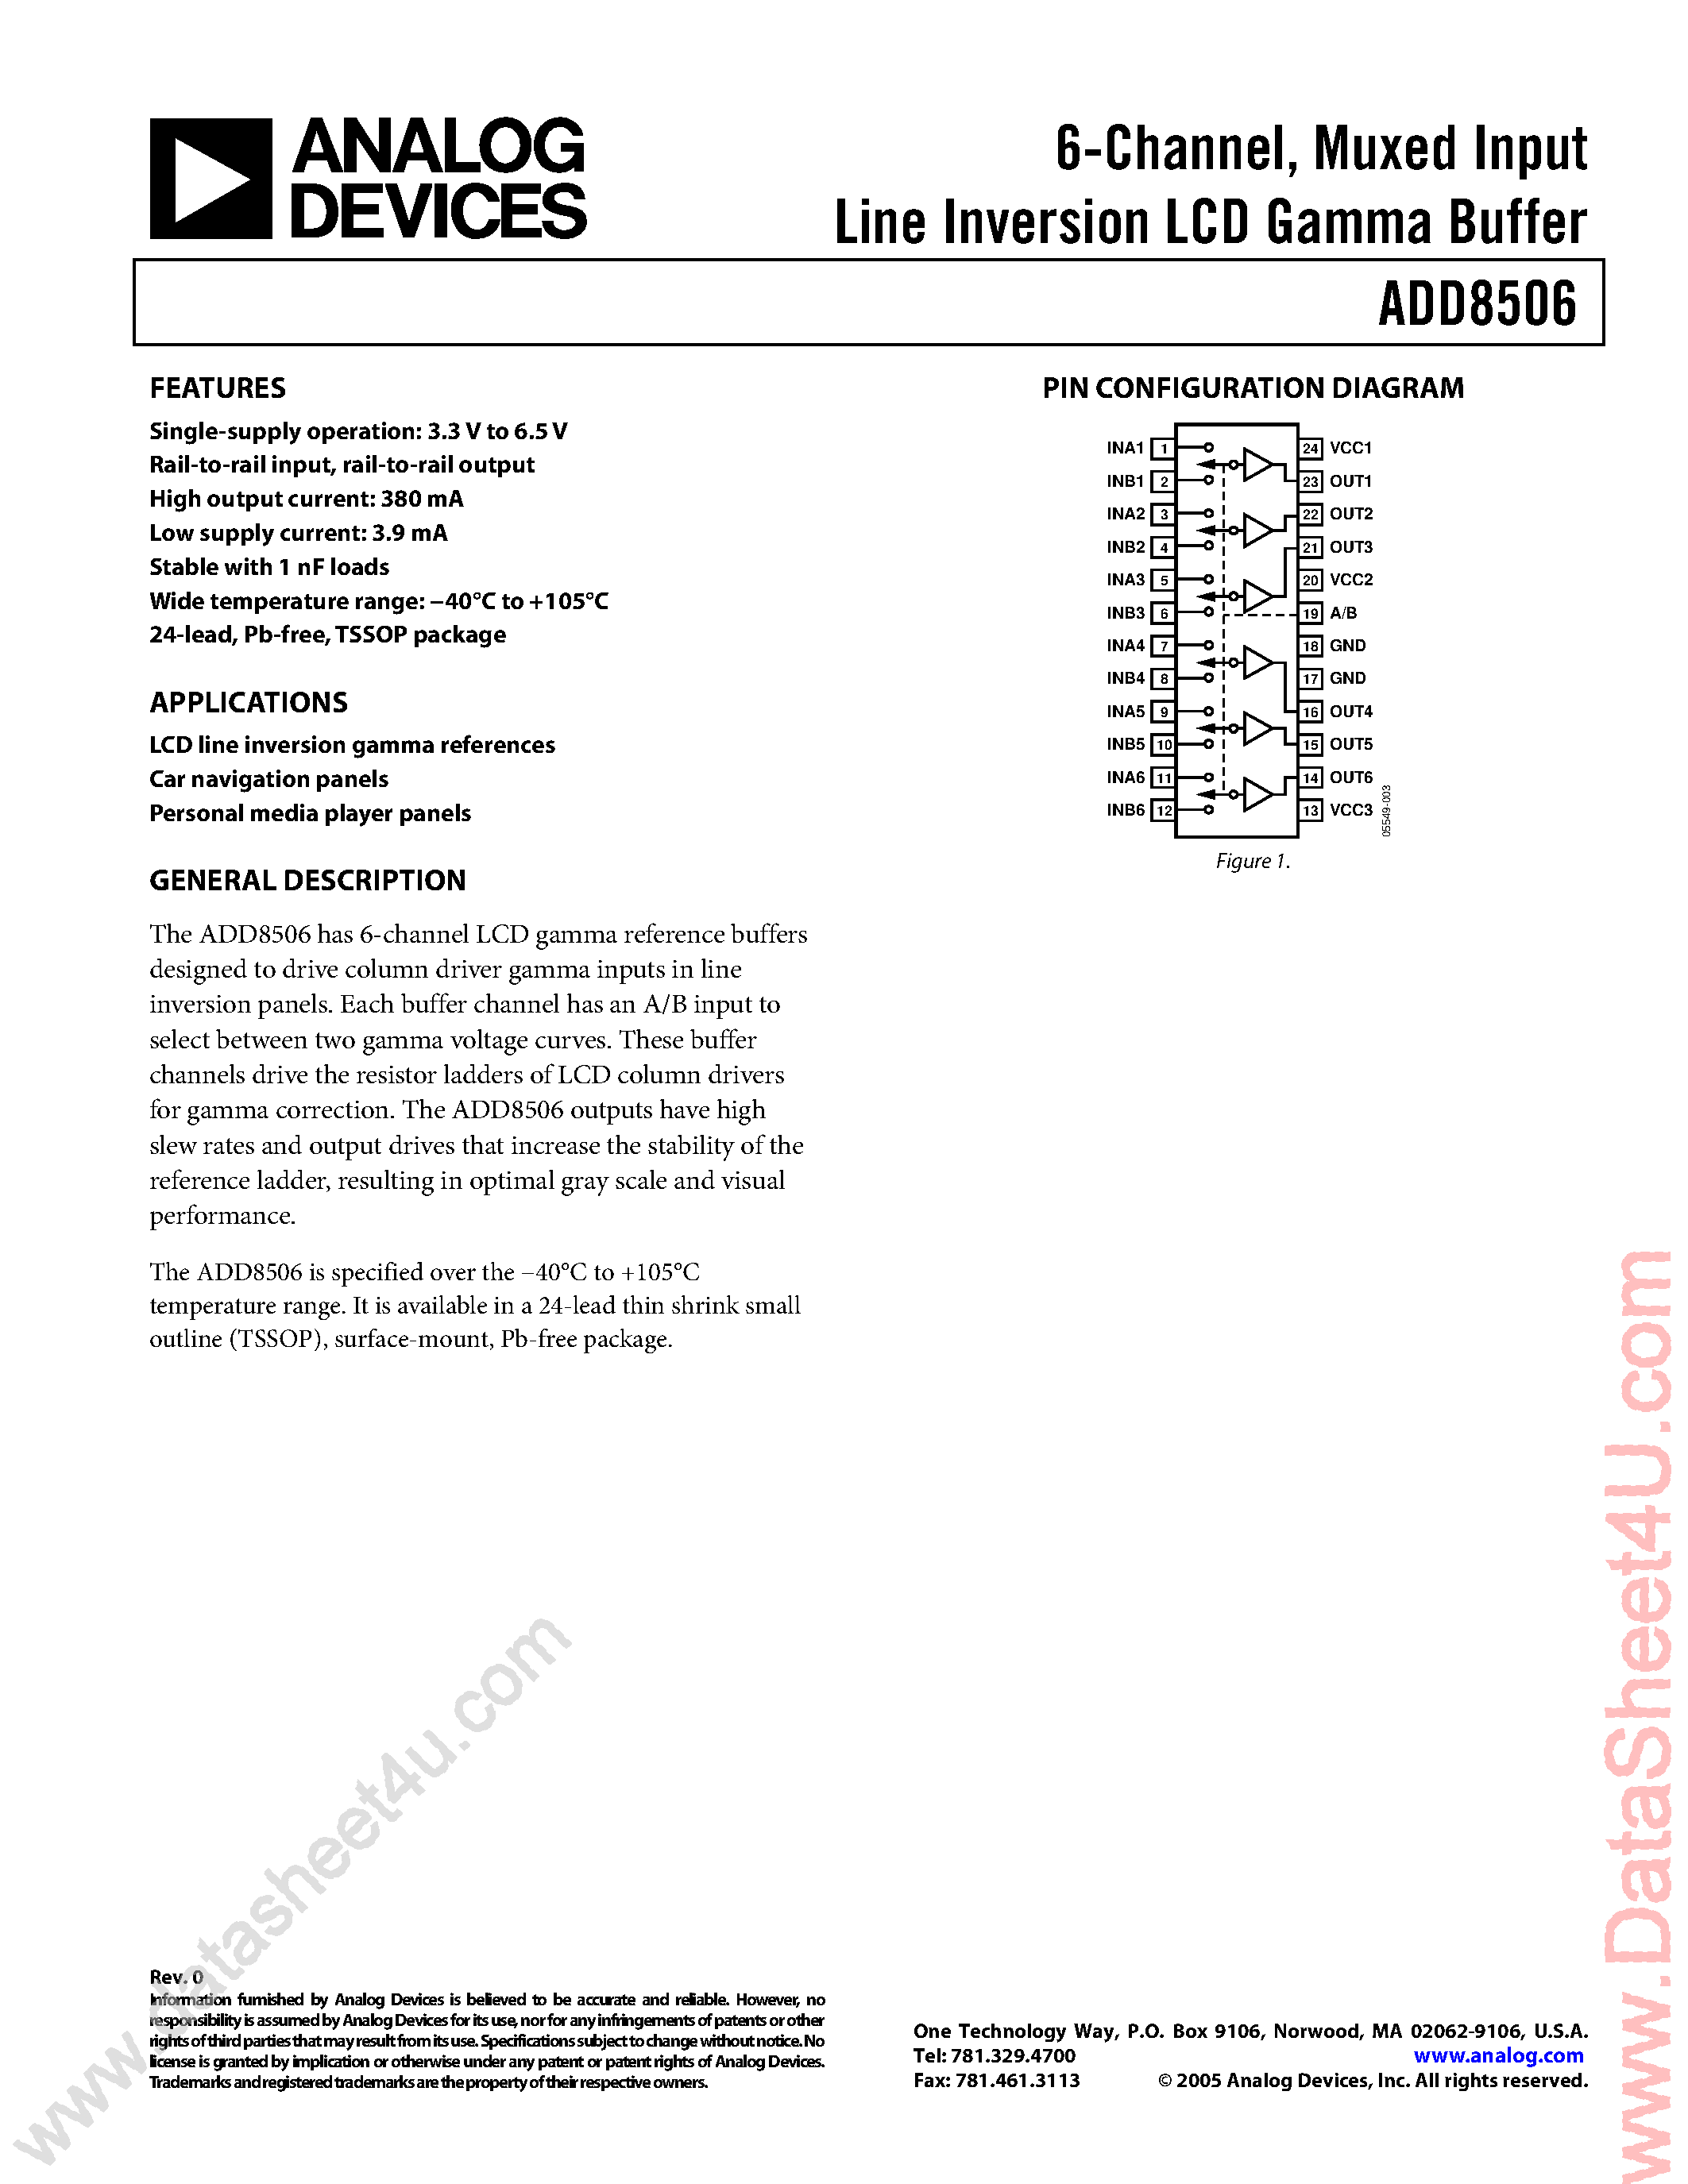 Datasheet ADD8506 - 6-Channel Muxed Input / LCD Gamma Reference Buffer page 1